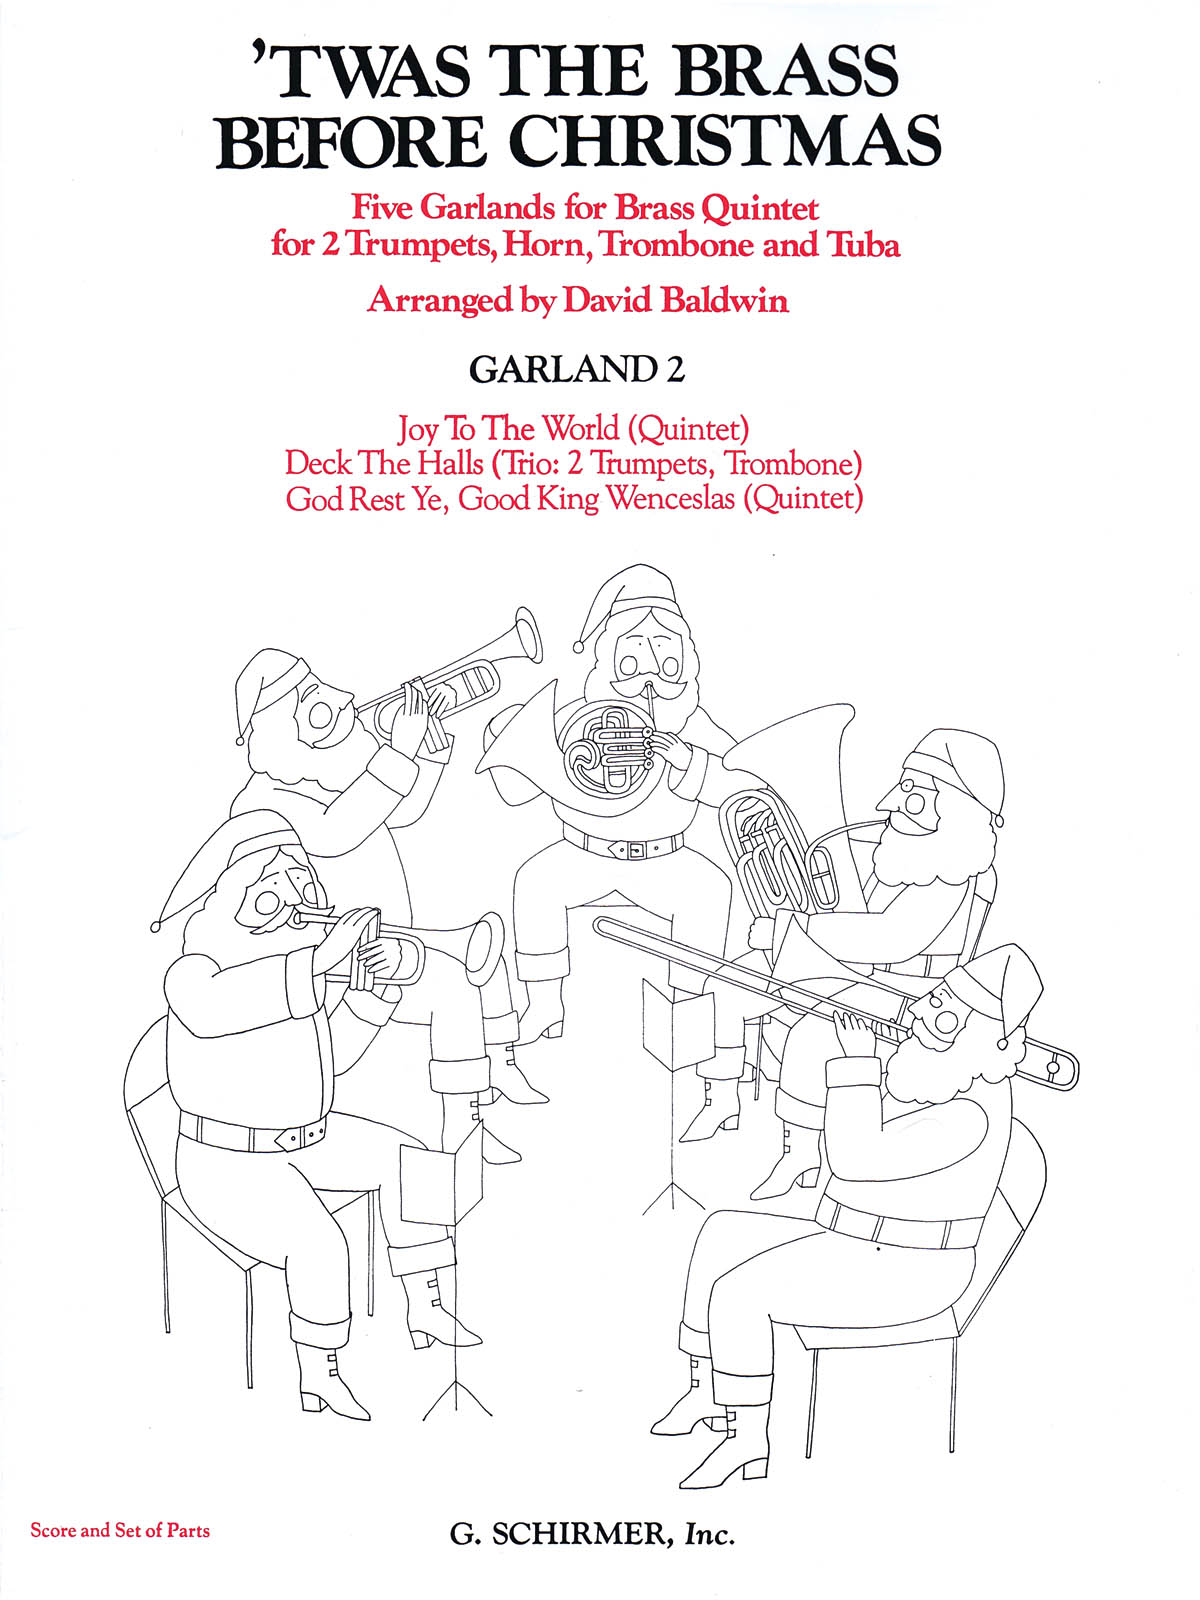 The Canadian Brass: Twas the Brass Before Christmas  3 Garlands: Brass Ensemble: